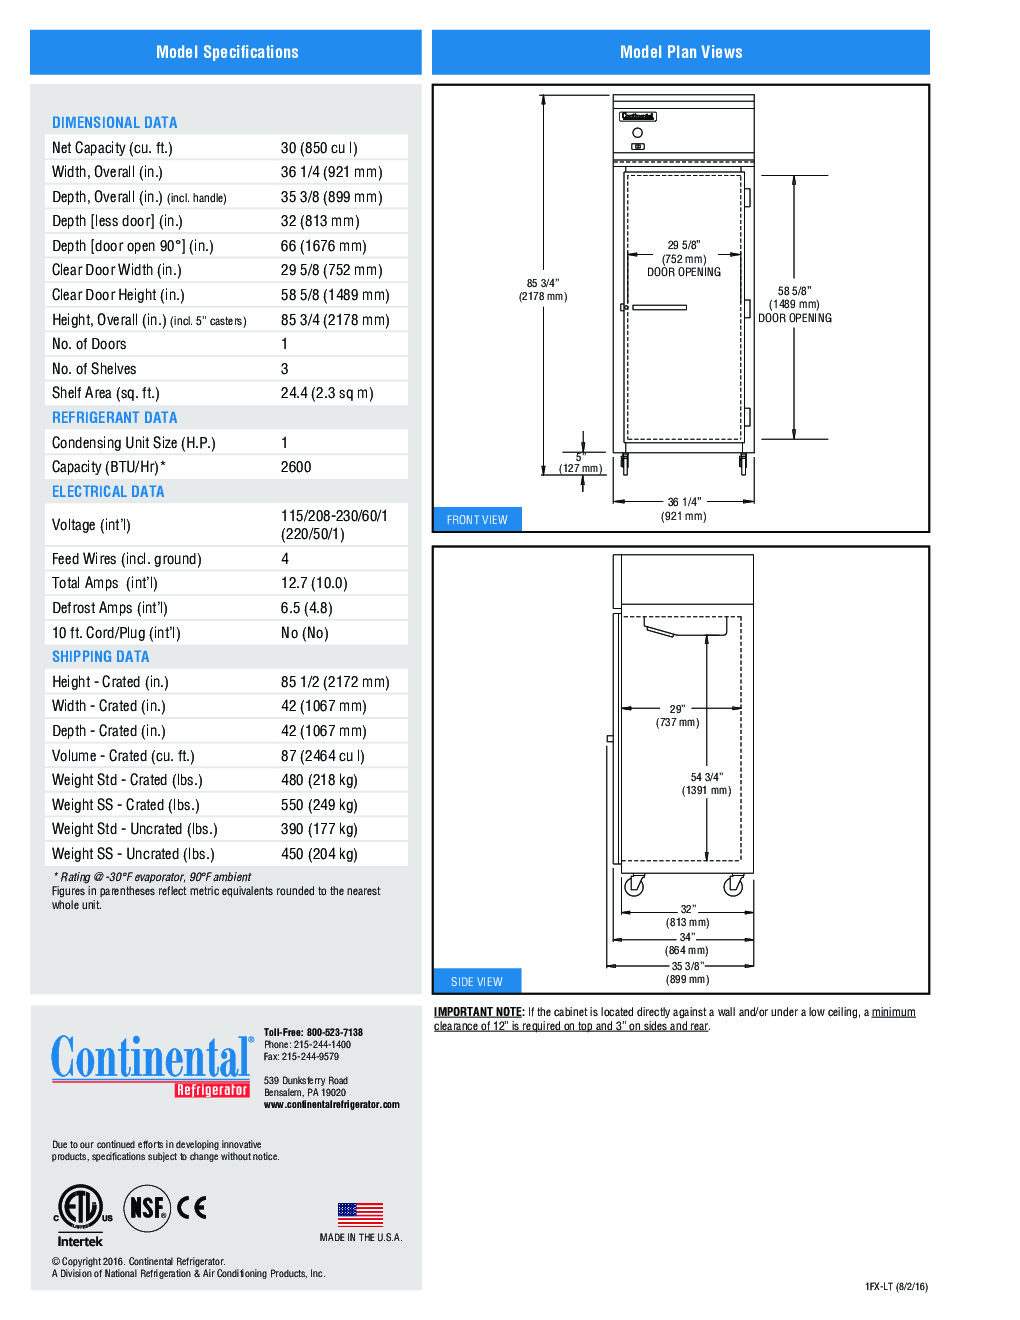 Continental Refrigerator 1FX-LT Reach-In Low Temperature Freezer